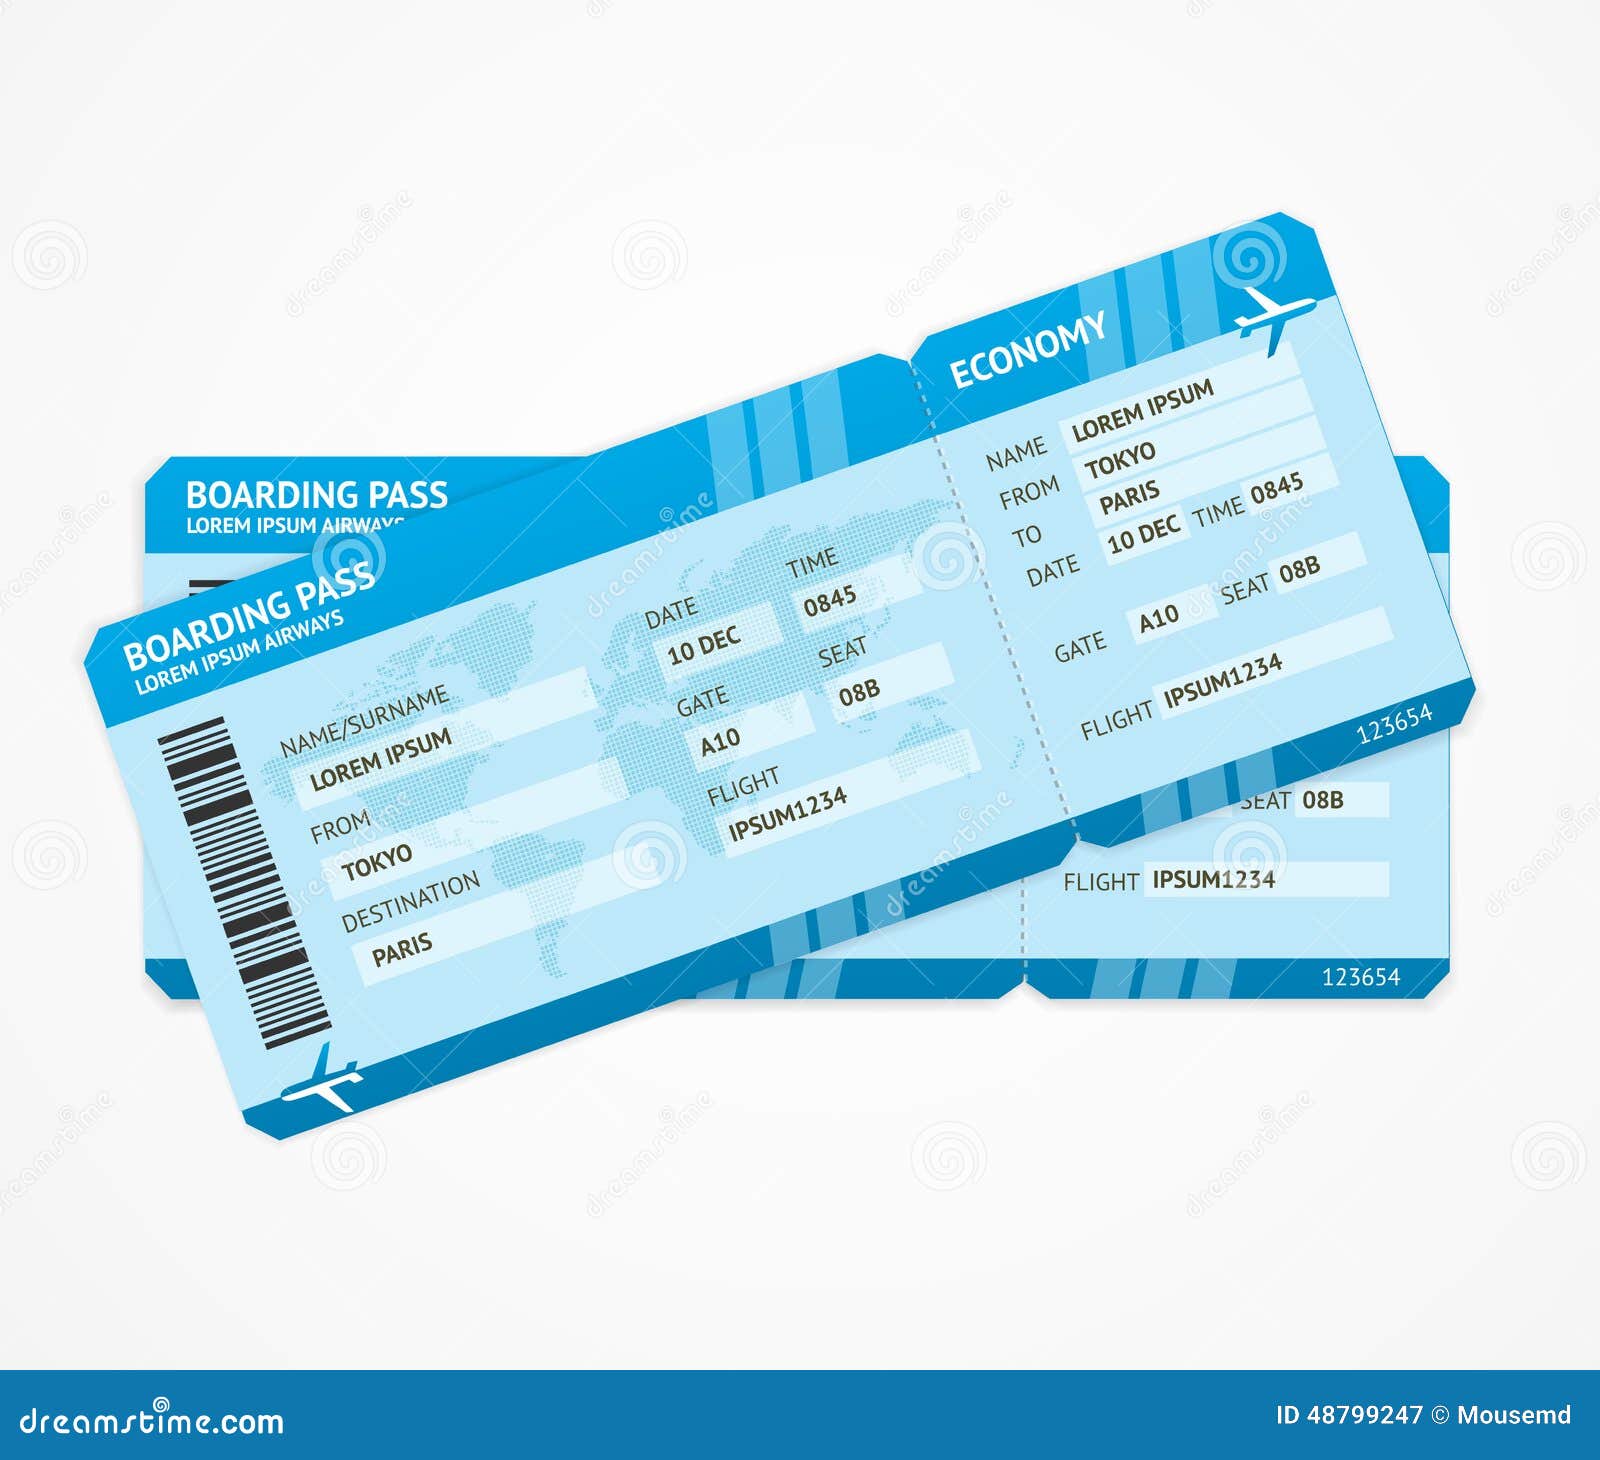 clipart plane ticket - photo #6